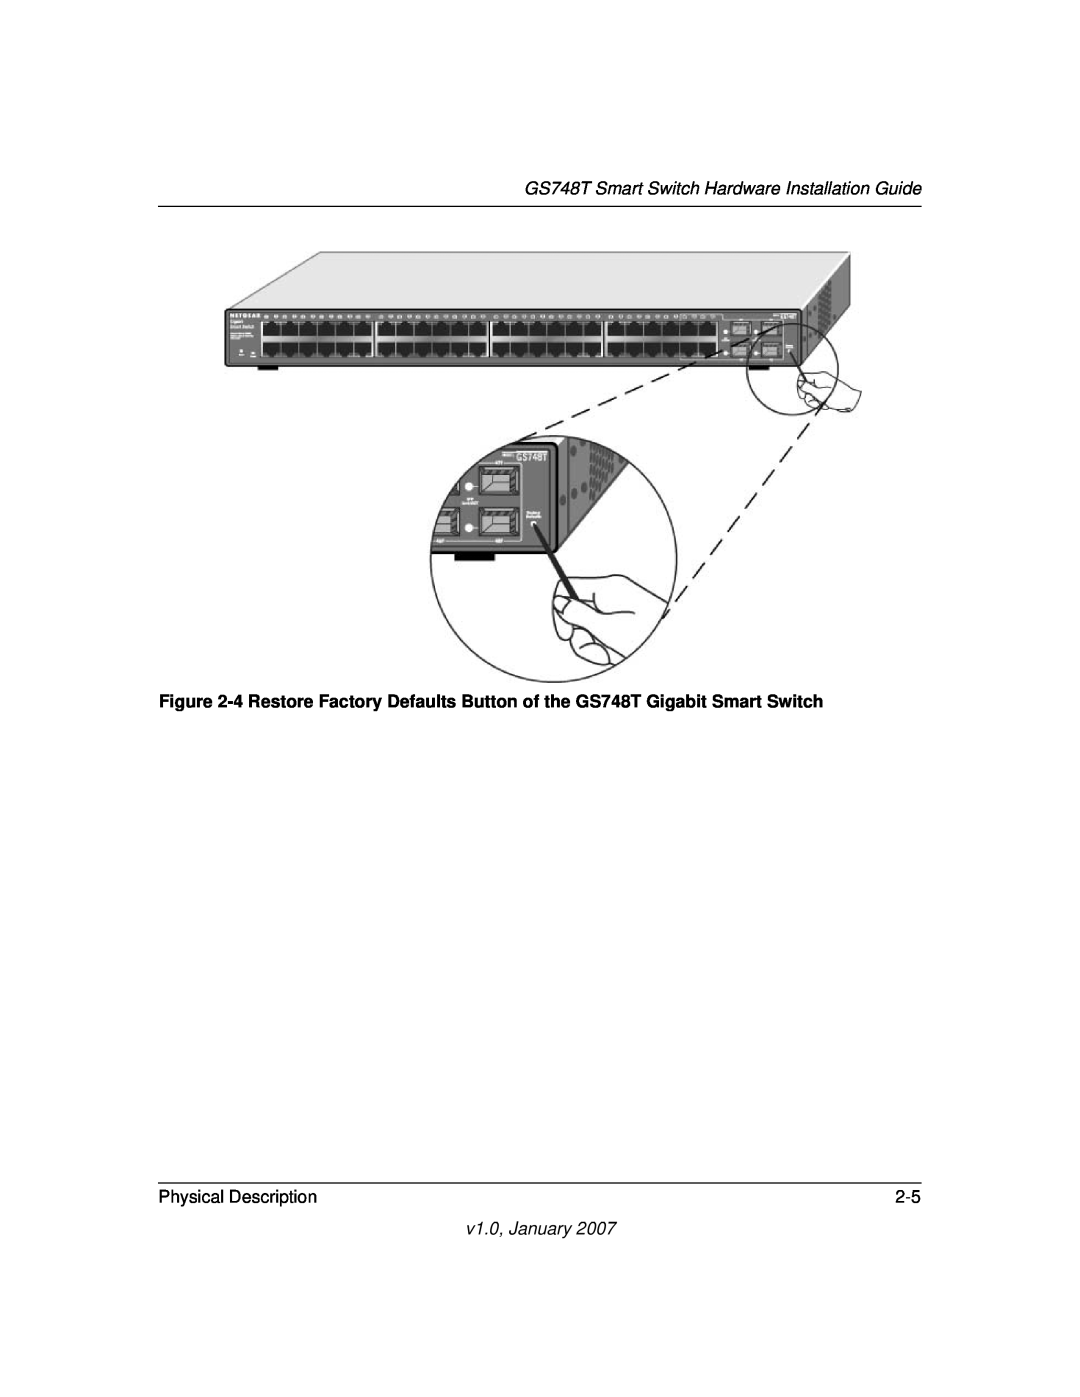 NETGEAR manual GS748T Smart Switch Hardware Installation Guide, Physical Description, v1.0, January 